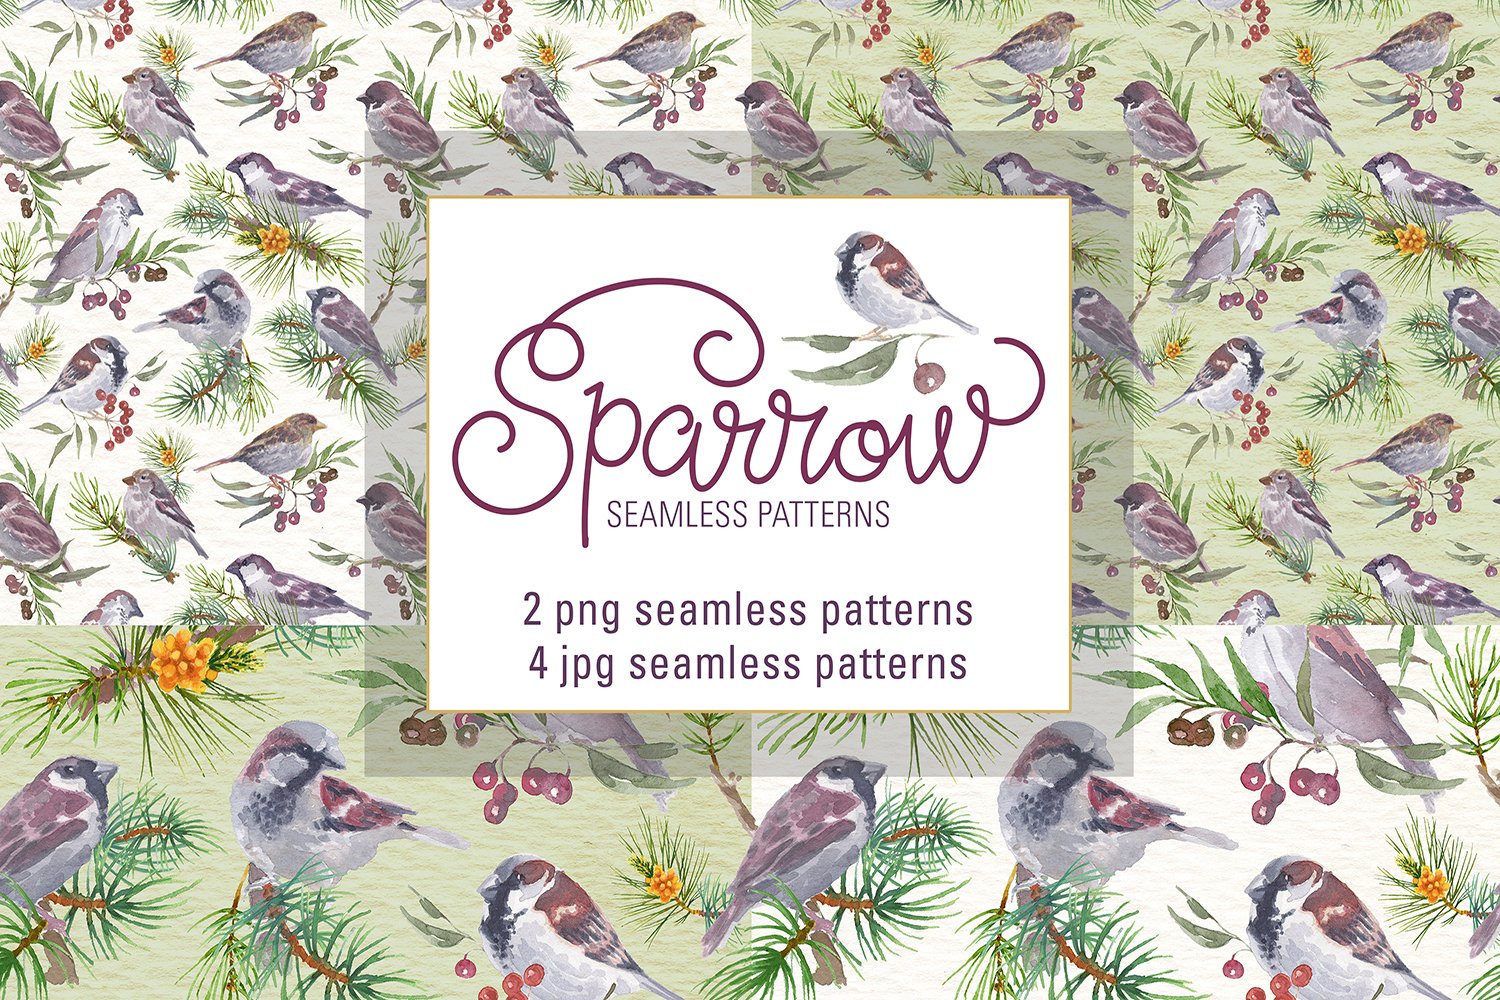 Sparrow seamless patterns.